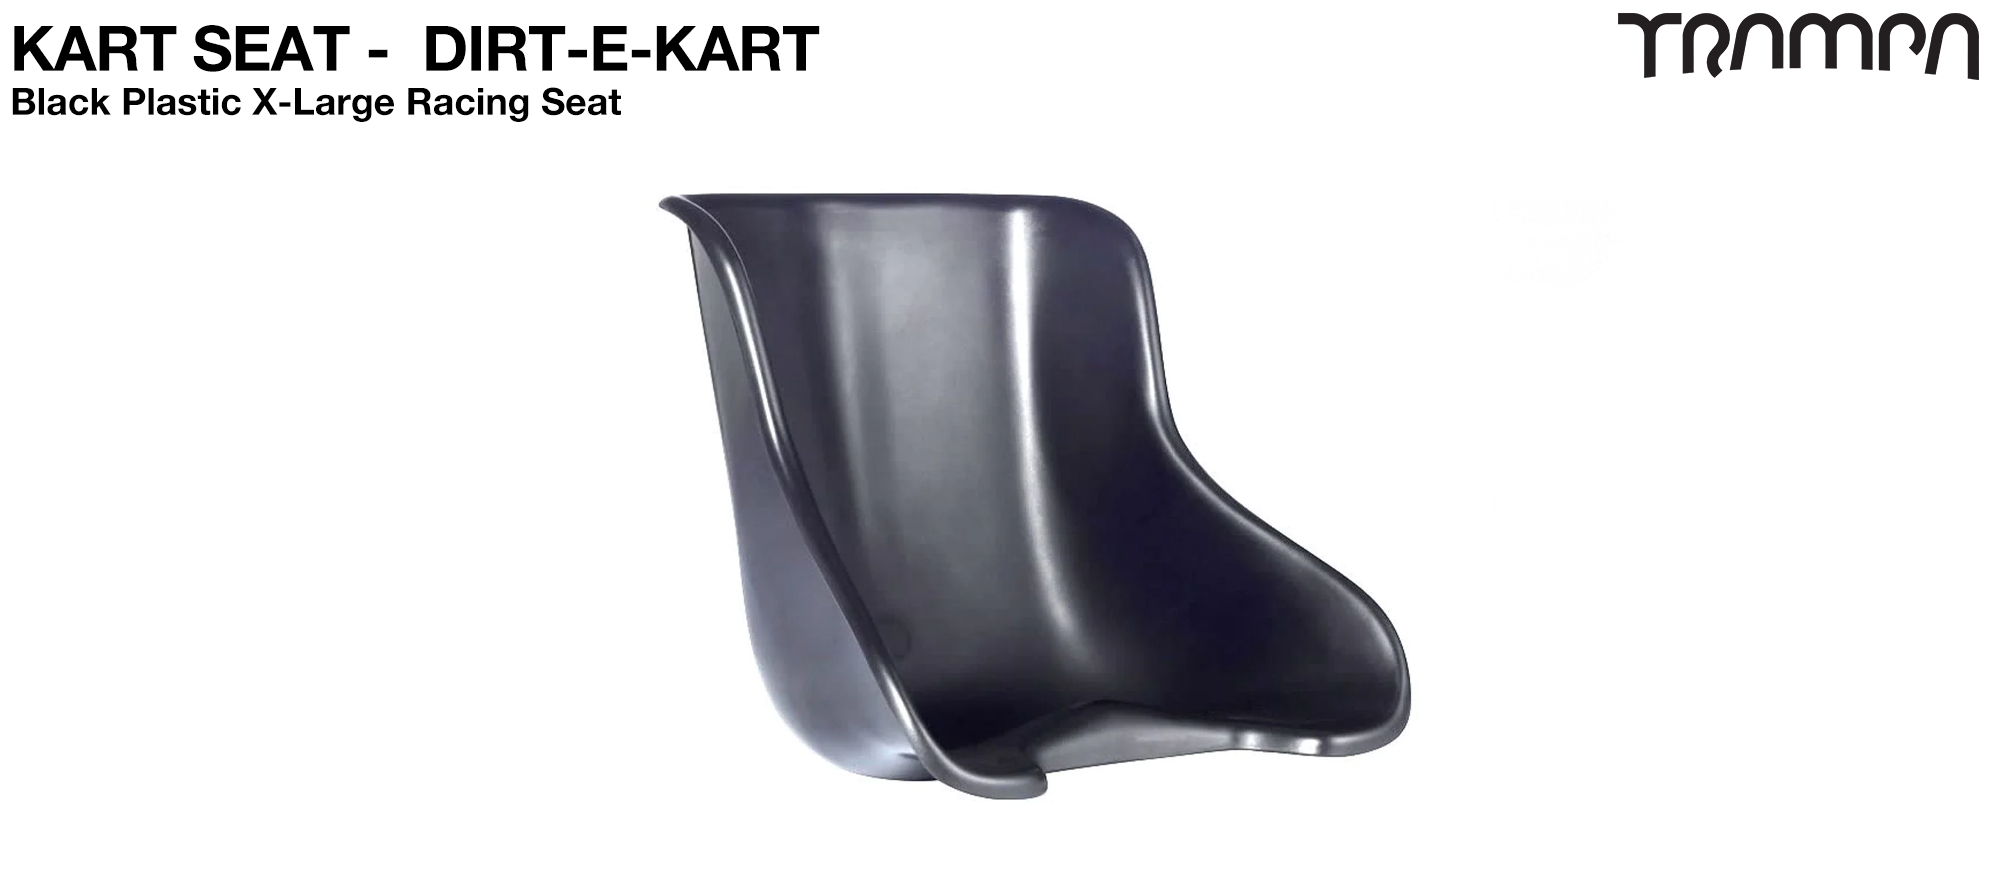 Go Kart Premium Black Plastic X-Large Xl Racing Seat Karting Racing Race